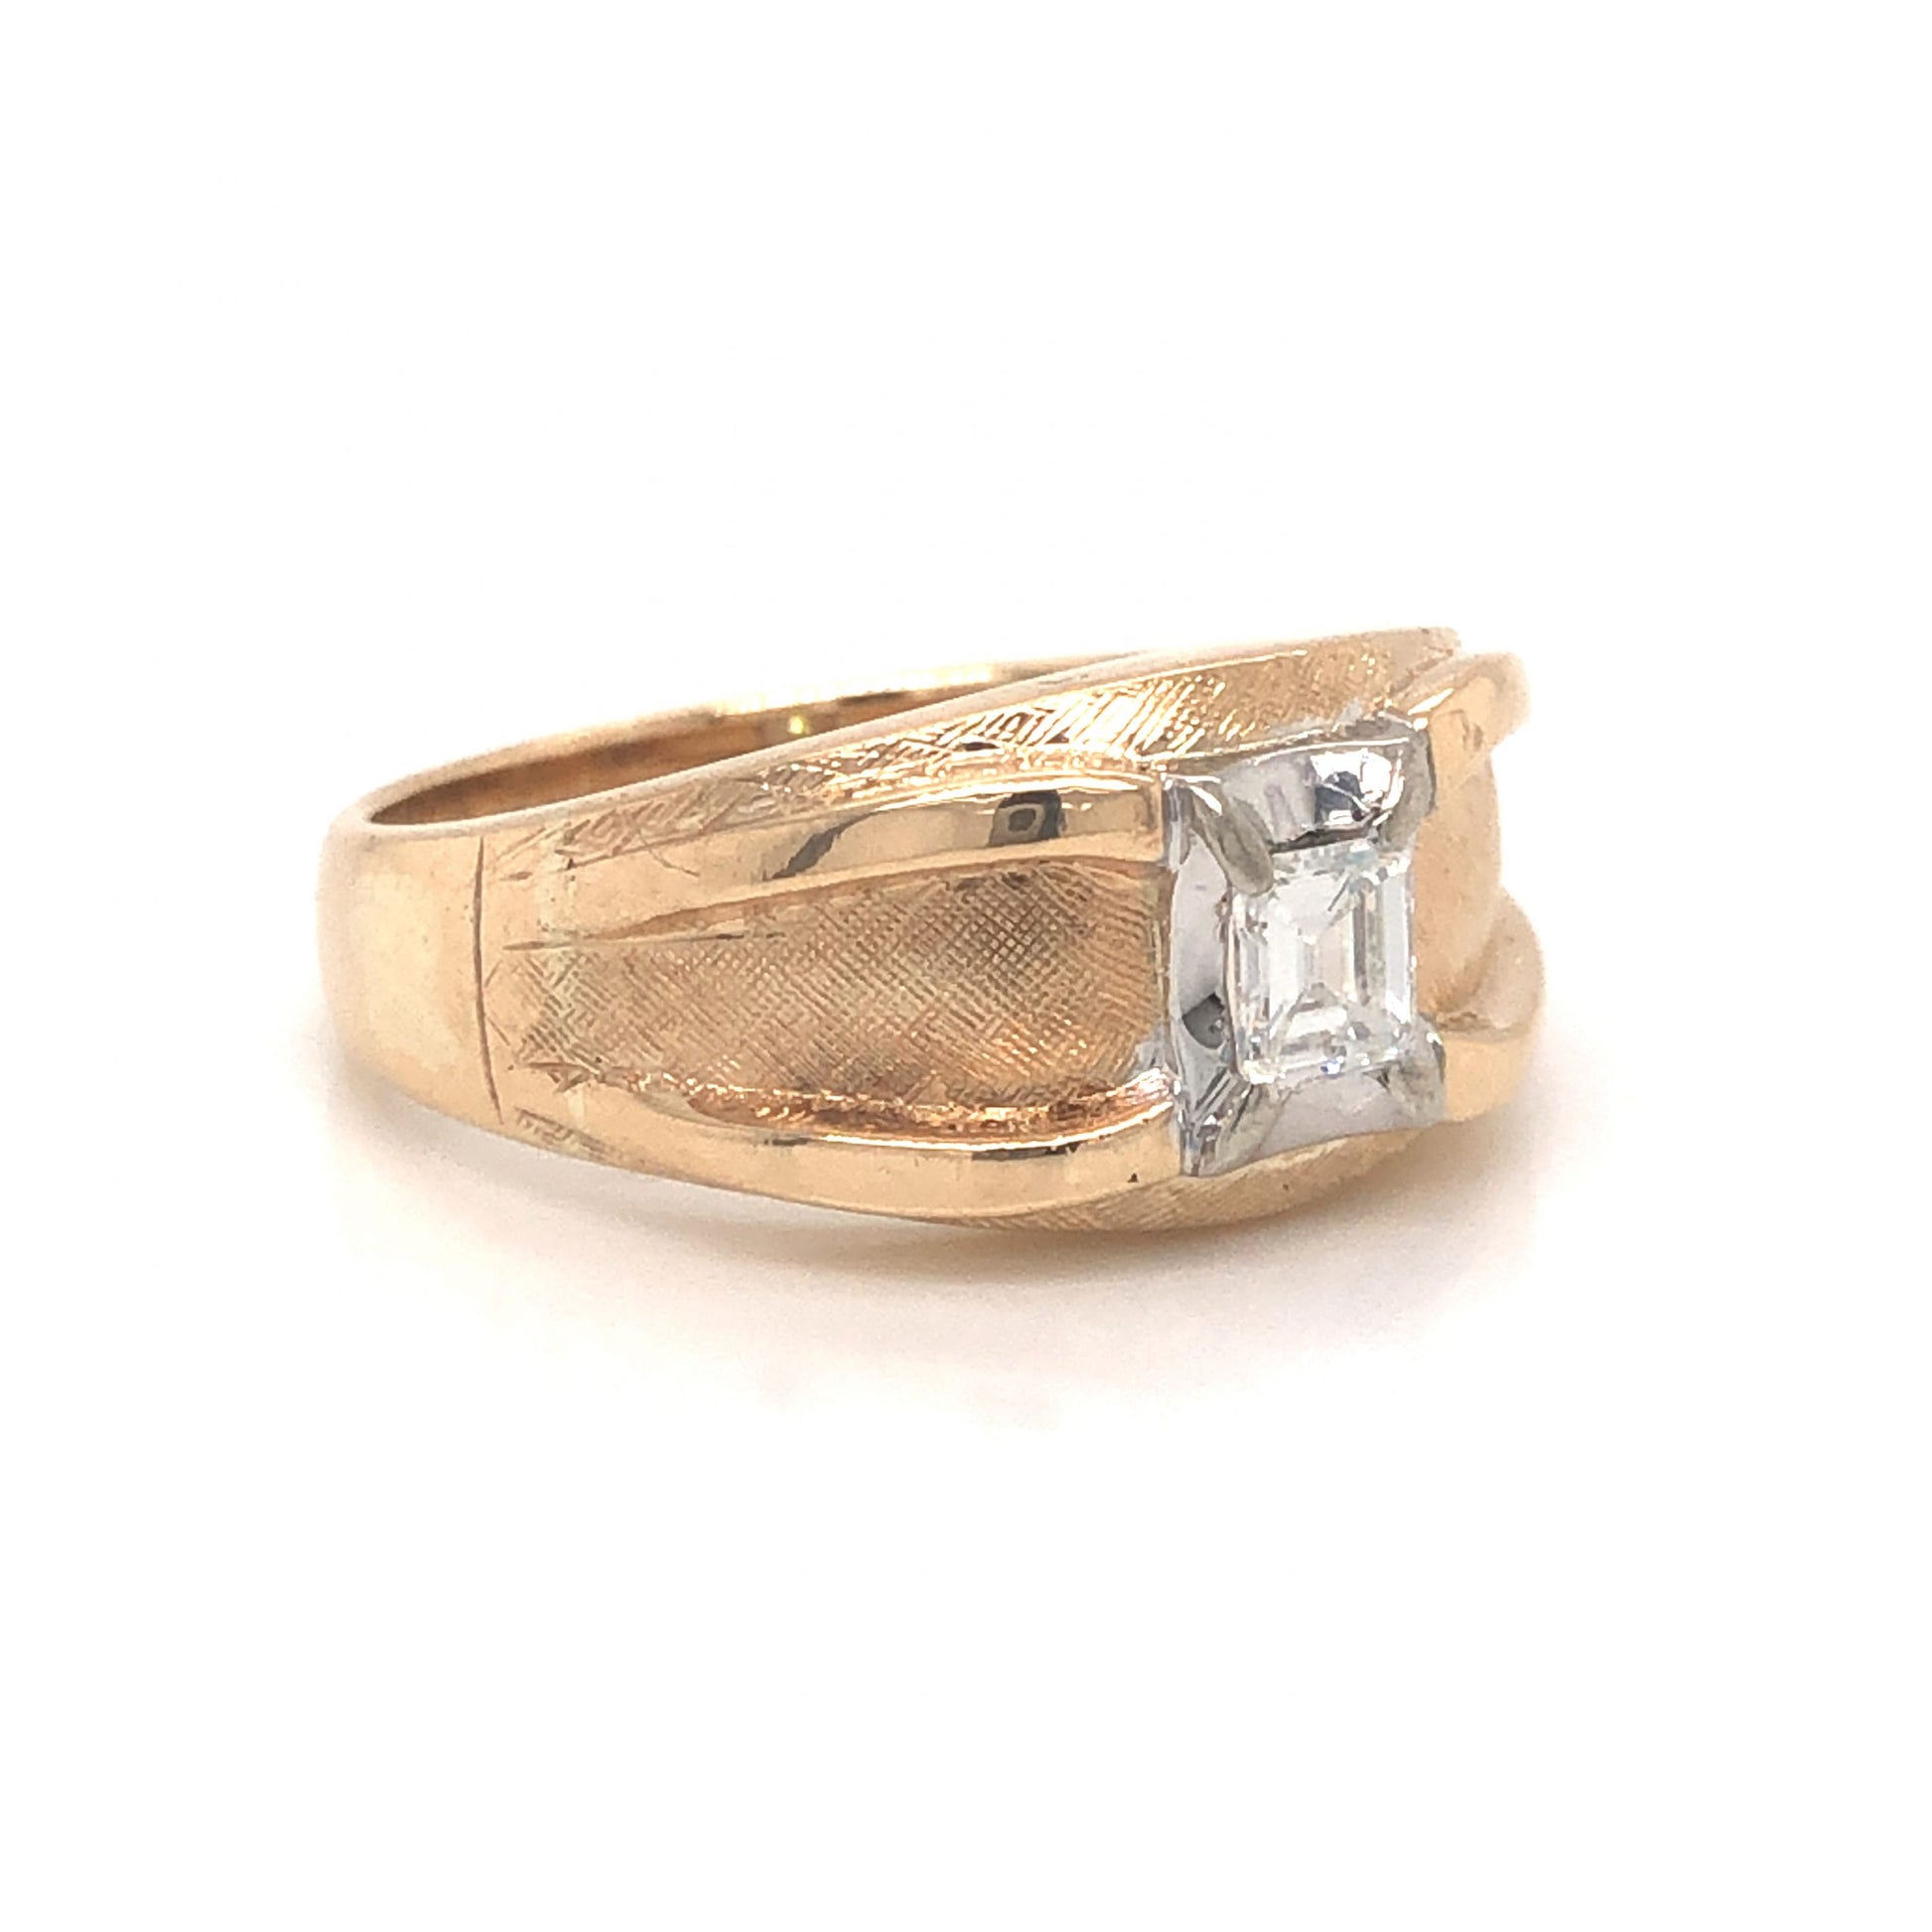 .24 Mid-Century Emerald Cut Diamond Ring in 14k Yellow GoldaComposition: 14 Karat White Gold/14 Karat Yellow Gold Ring Size: 7.5 Total Diamond Weight: .24ct Total Gram Weight: 7.1 g Inscription: 14k, K.M.D. TO J.L.M. 9-9-61
      